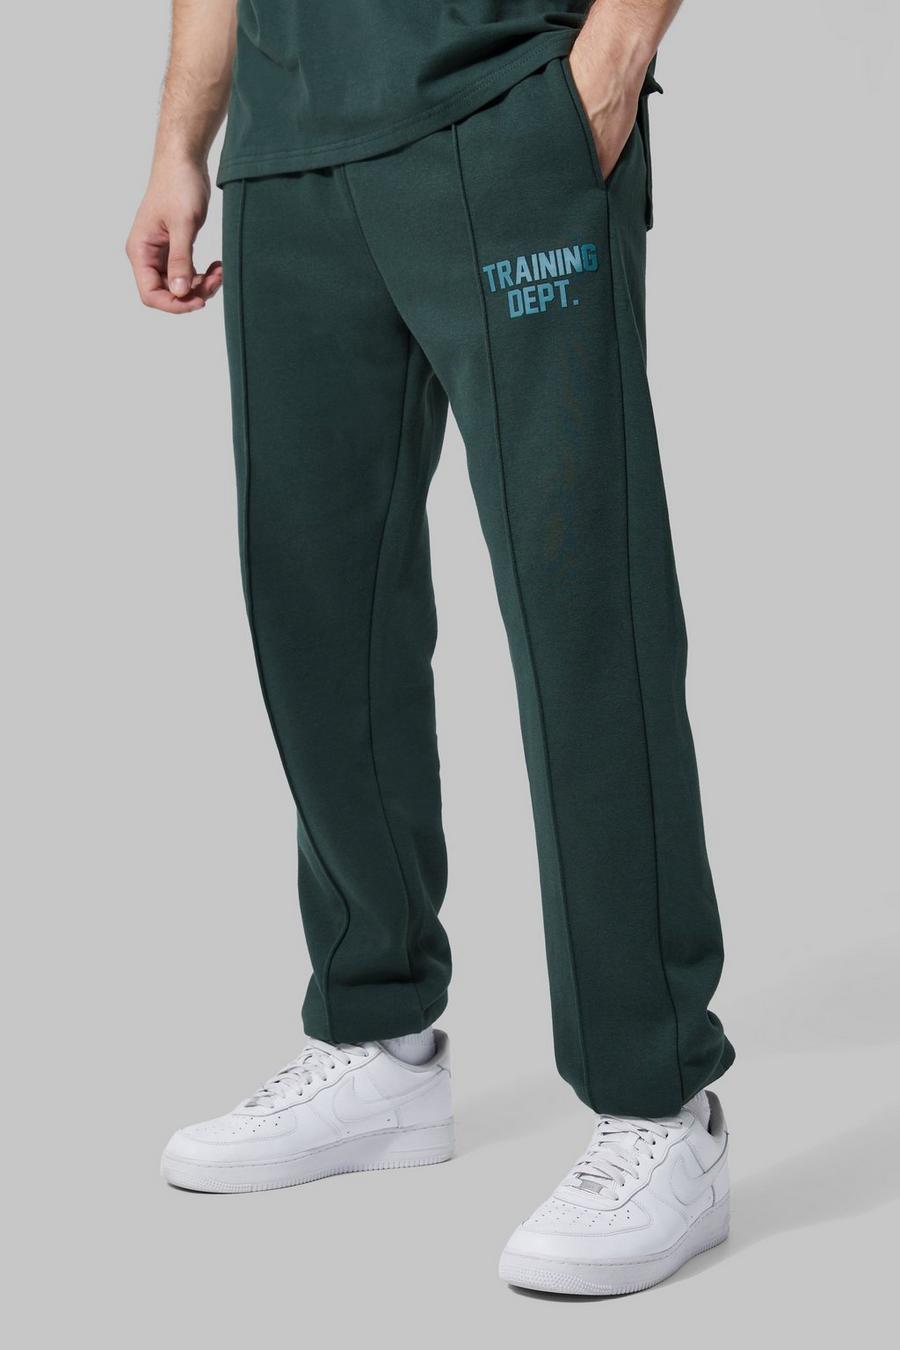 Pantalón deportivo Tall Active ajustado, Dark green image number 1